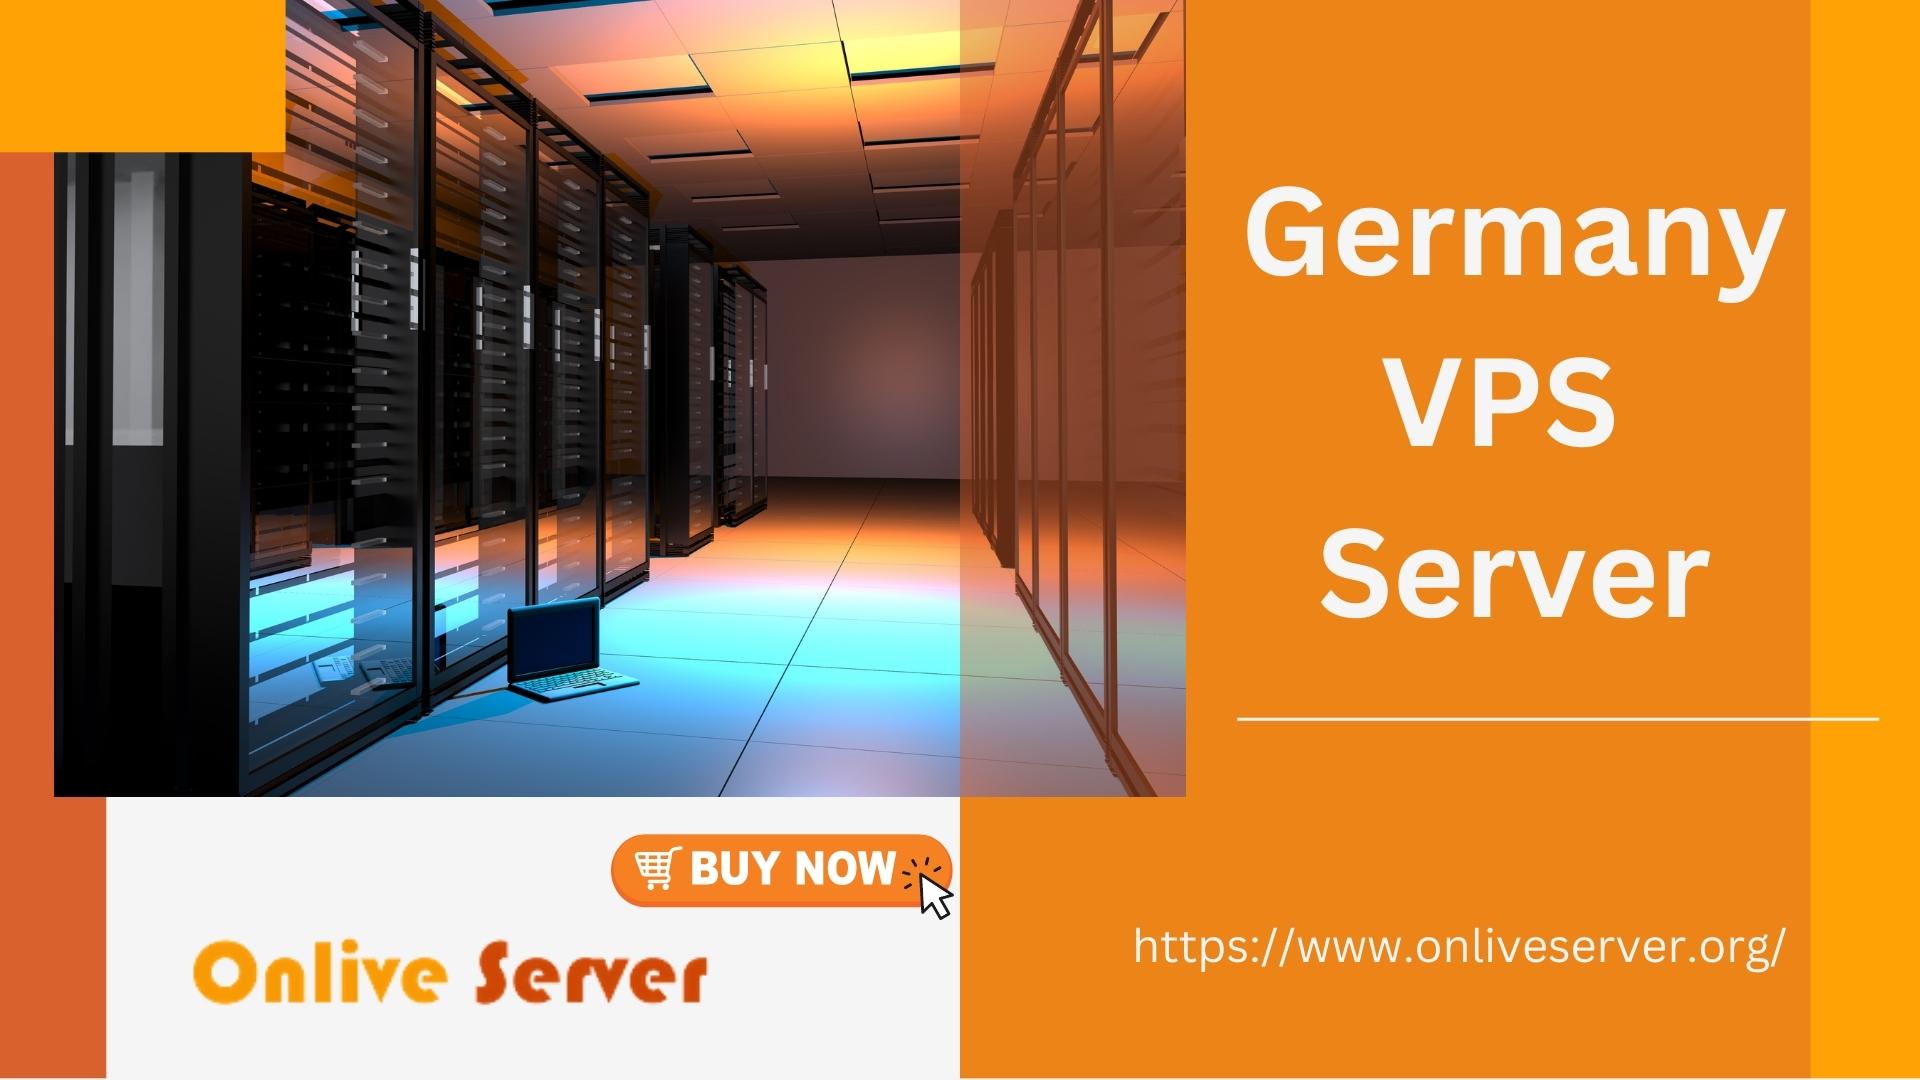 Germany VPS Server